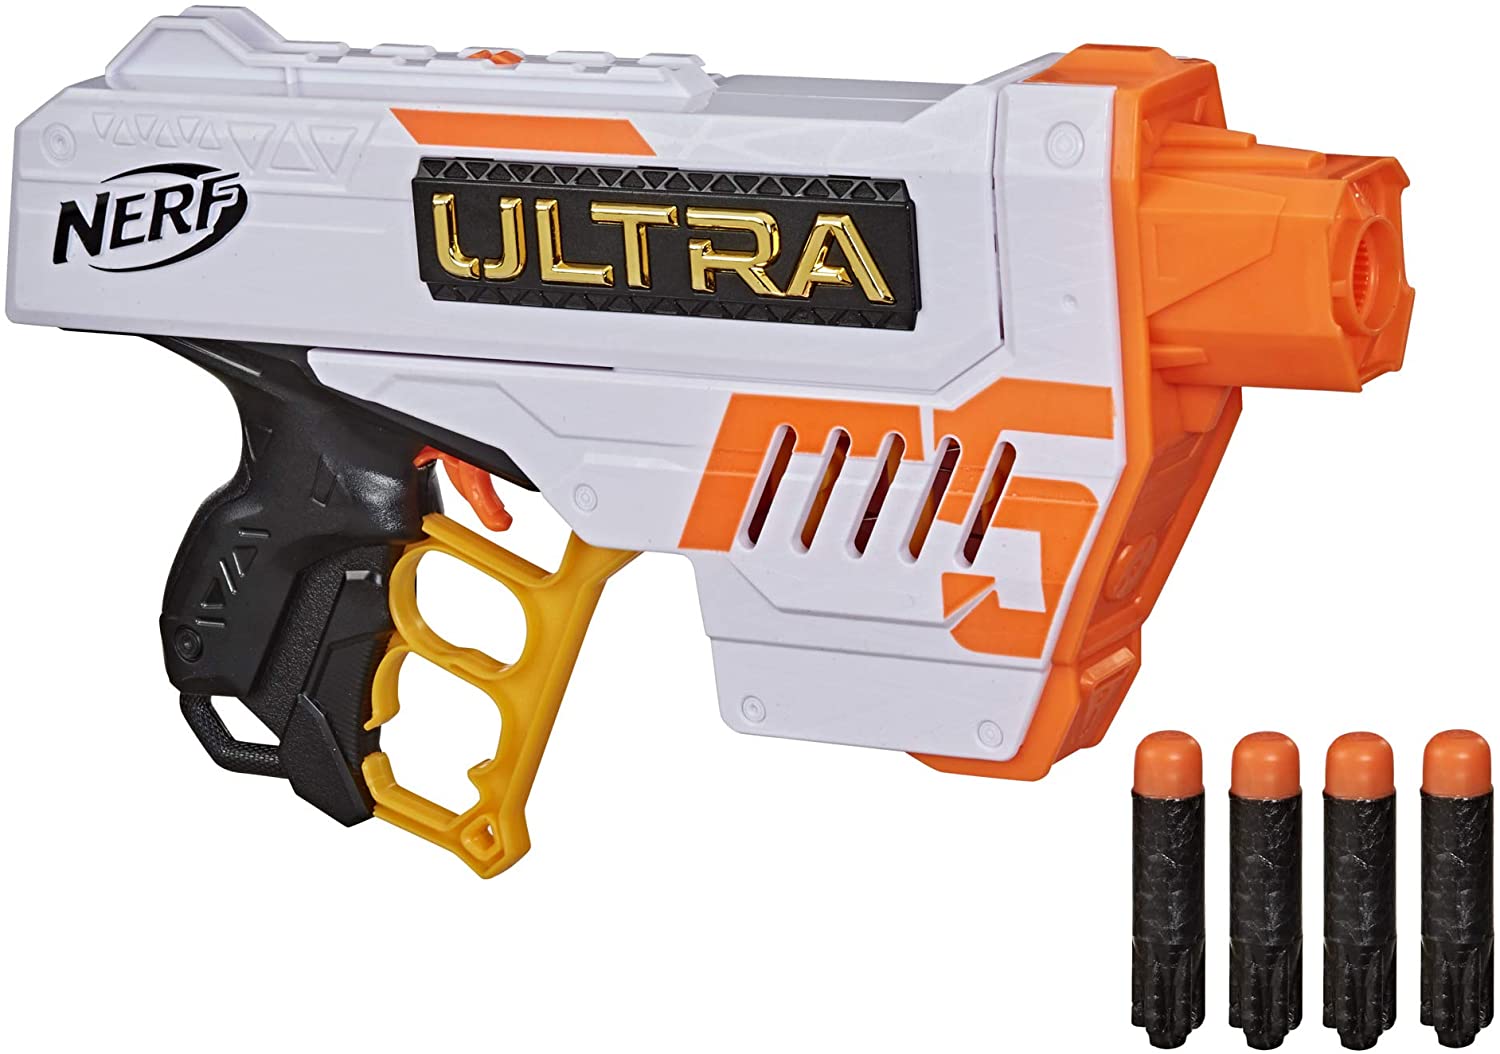 NERF Ultra Five Blaster w/ 4 Ultra Darts $10.99 + Free S&H w/ Prime or orders $25+